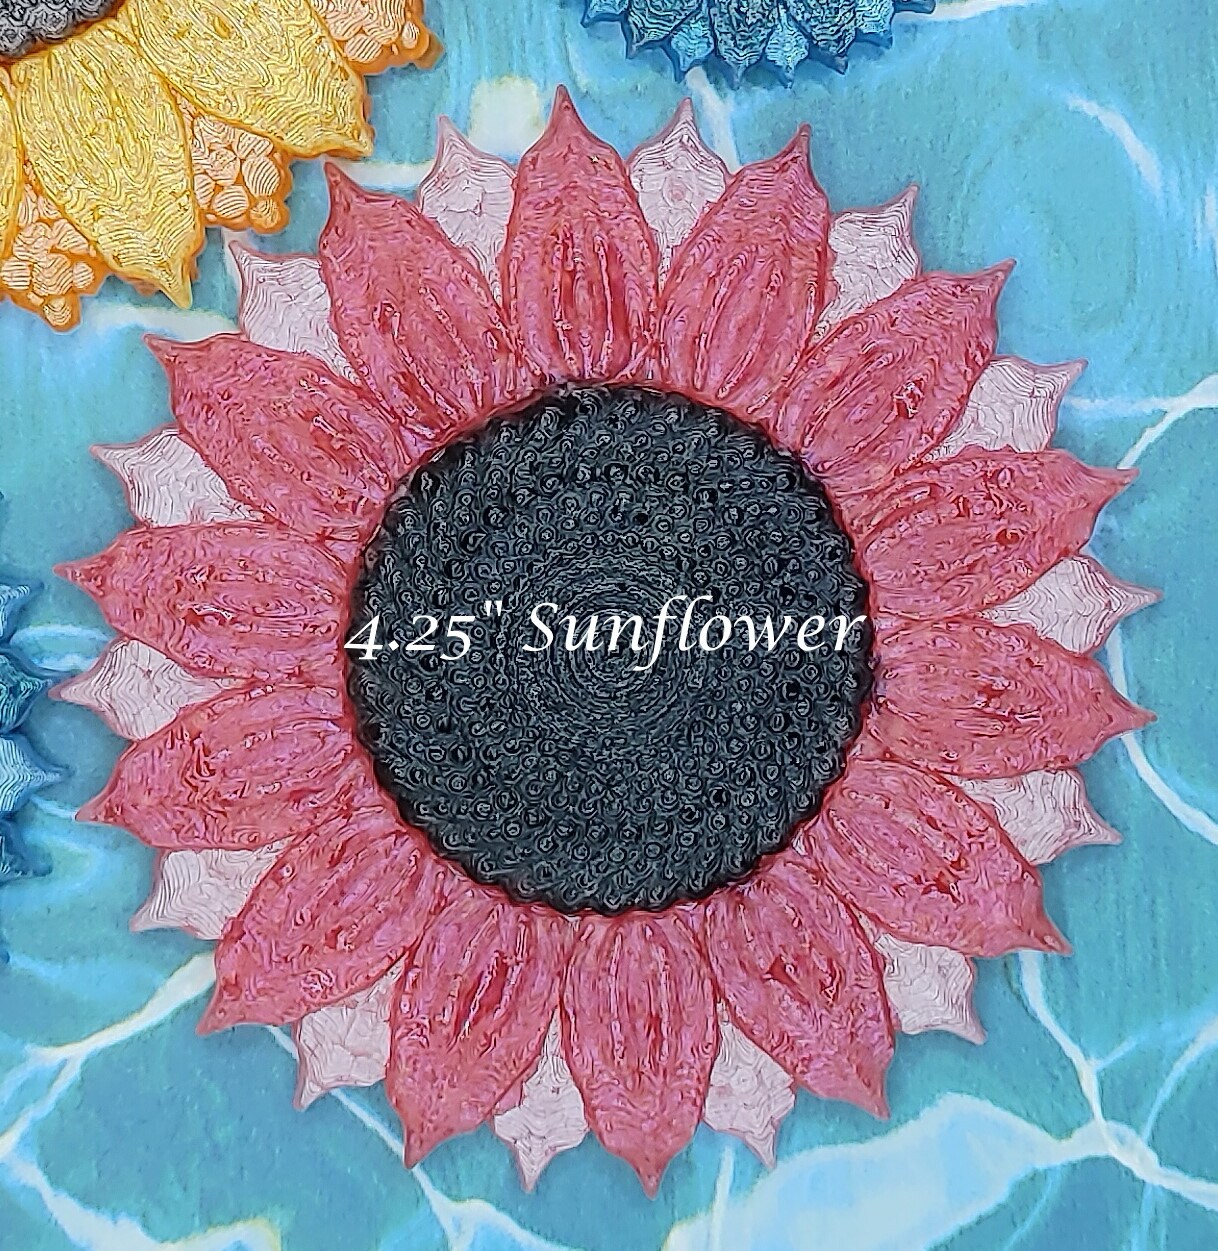 Sunflower Silicone Freshie Mold - 4.25 diameter